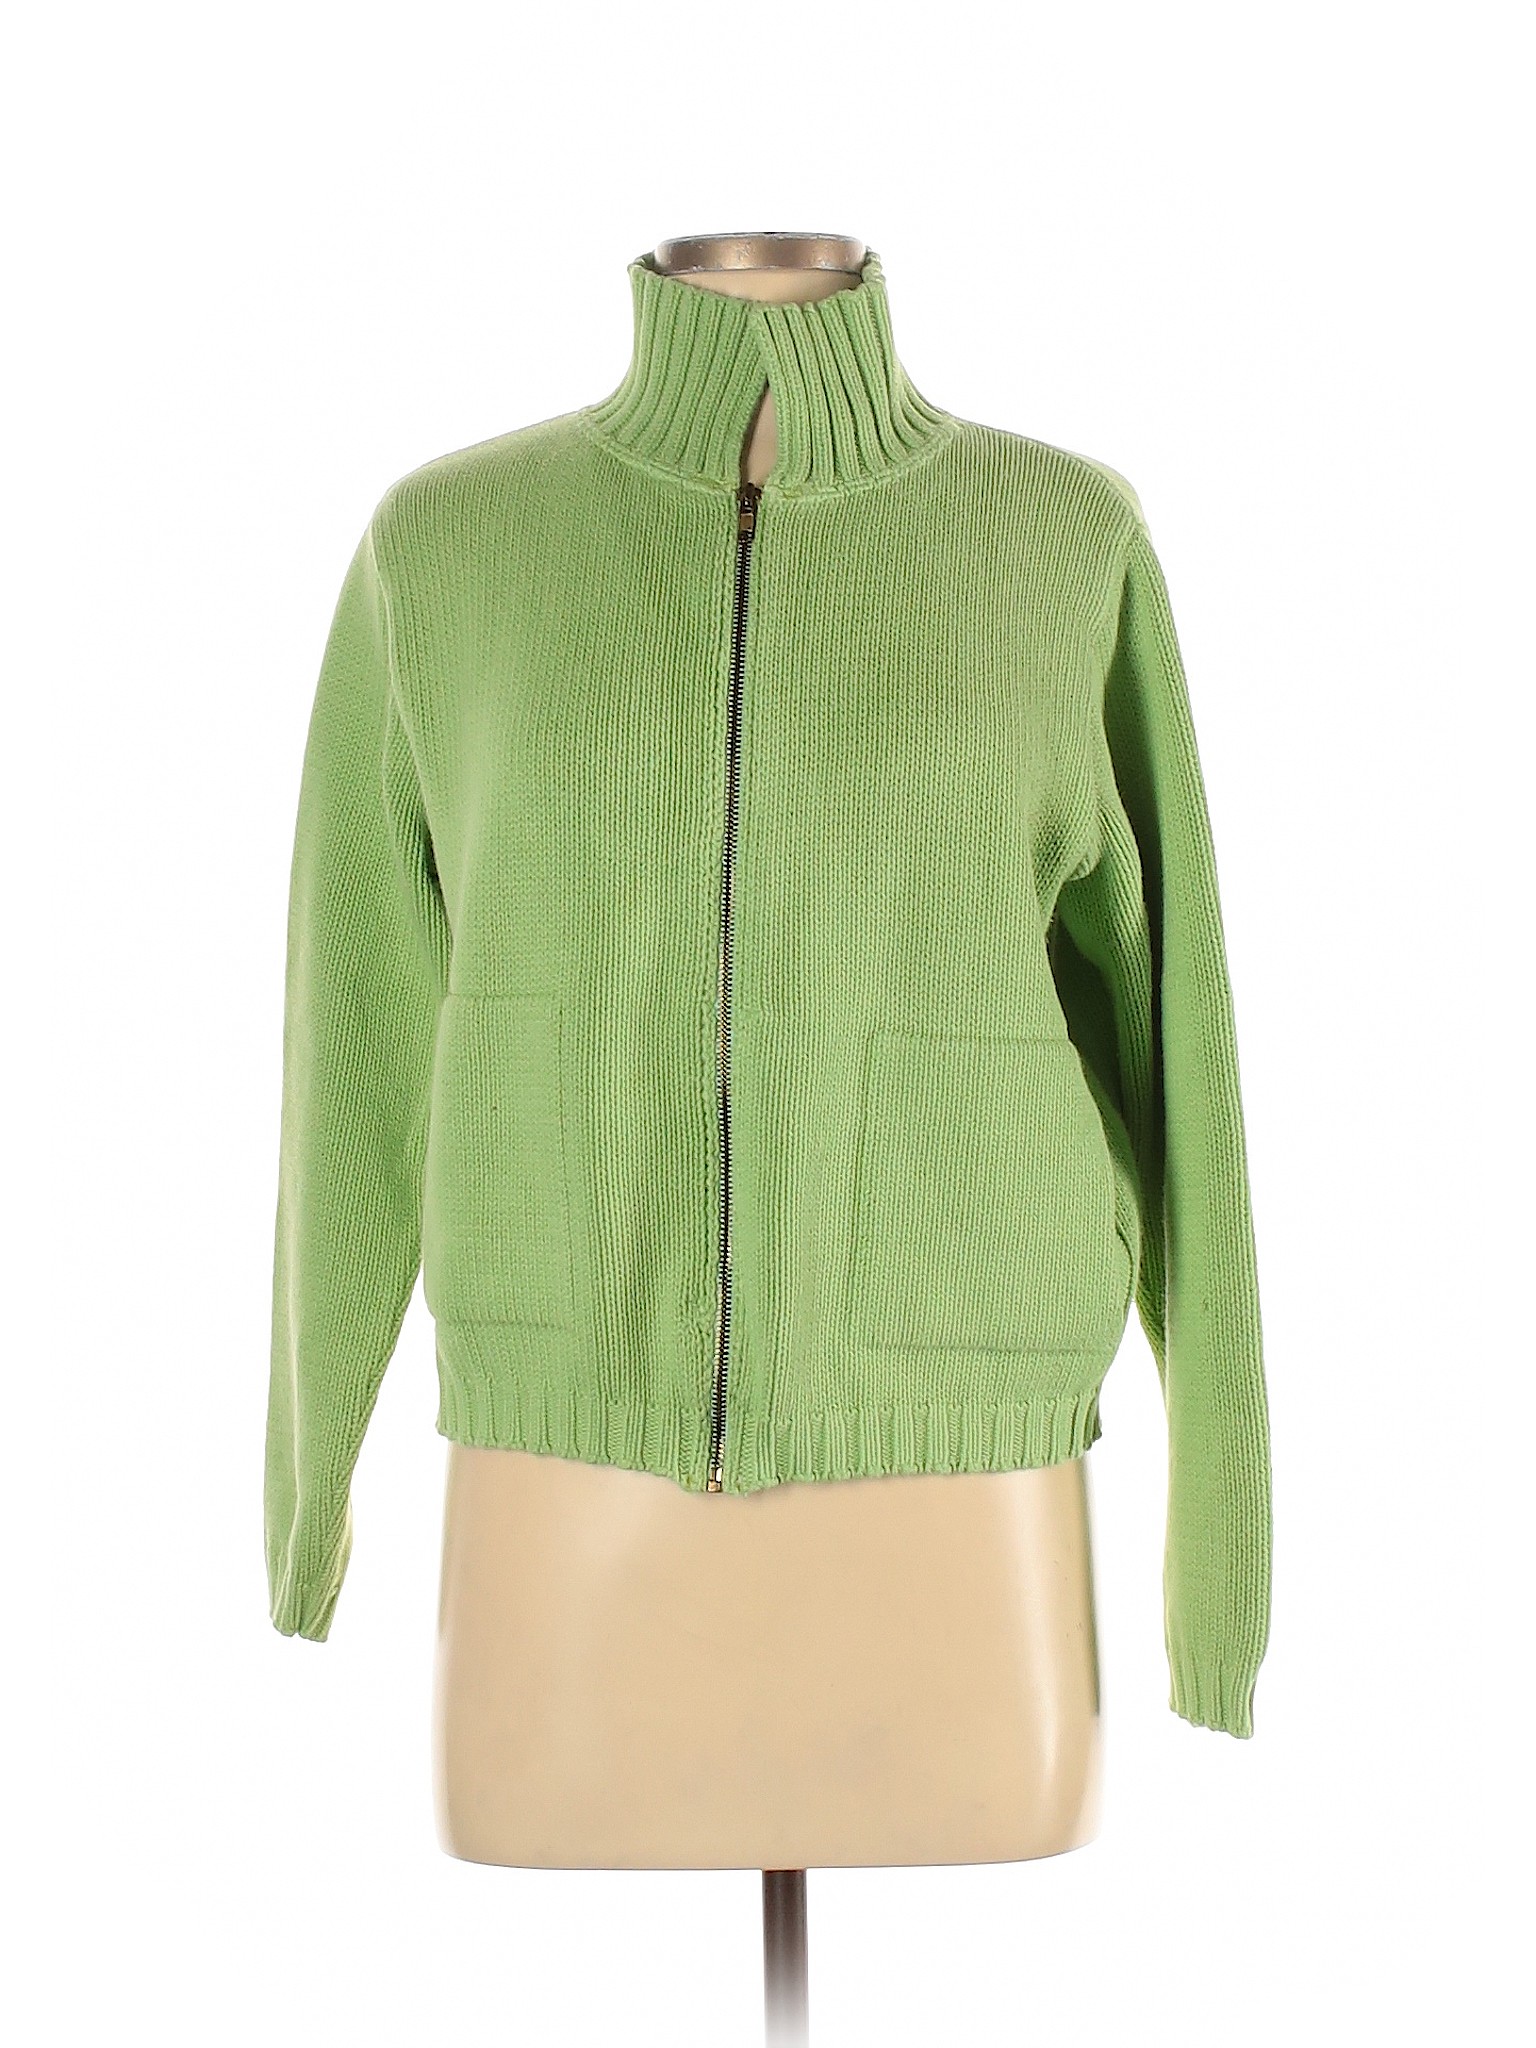 BKg & Company Women Green Cardigan One Size | eBay